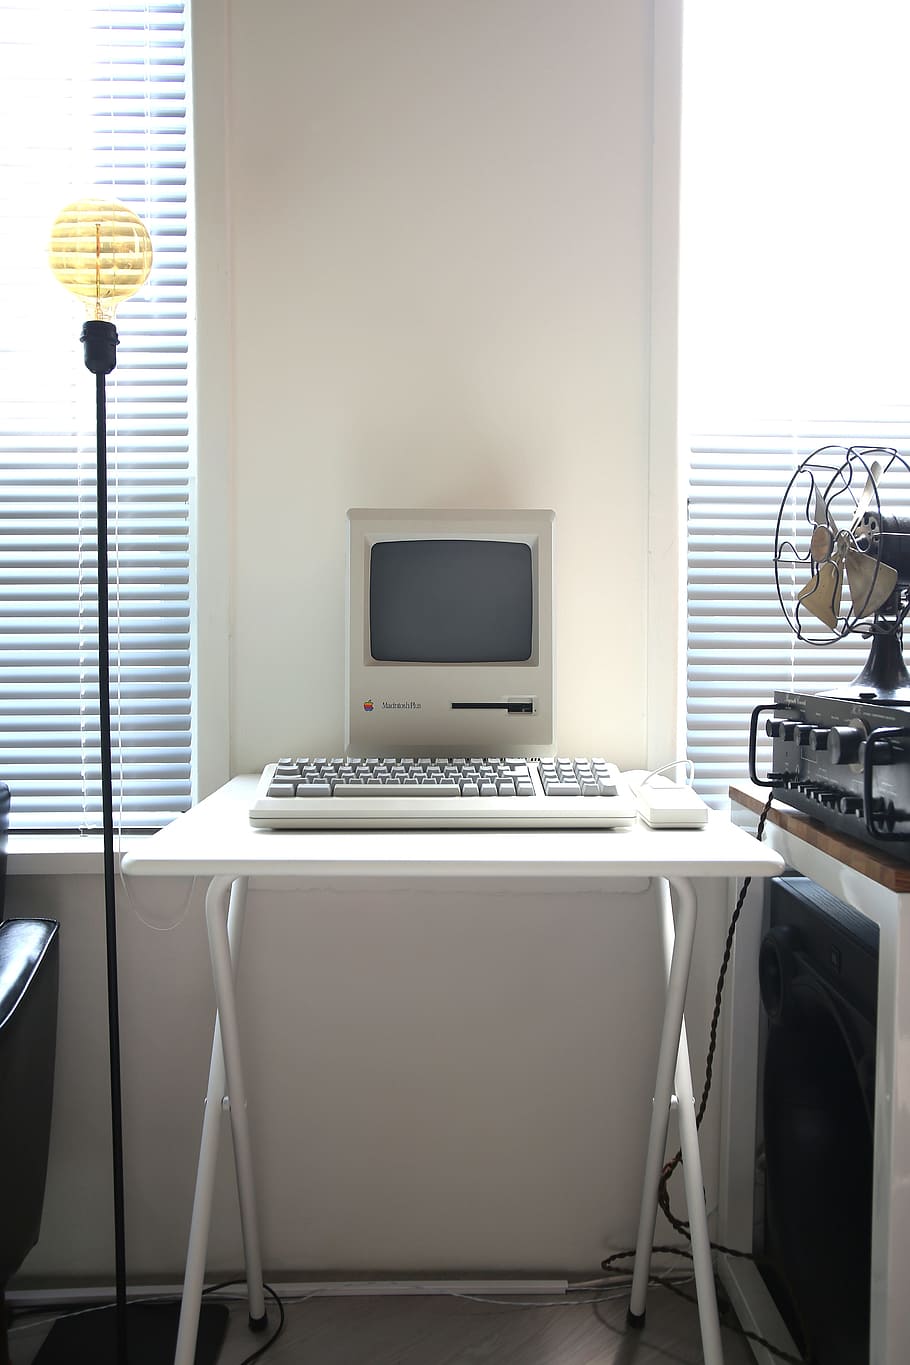 Old Mac, konsyap, oldeumaek, interior photos, computer, desk, office, indoors, computer Monitor, technology